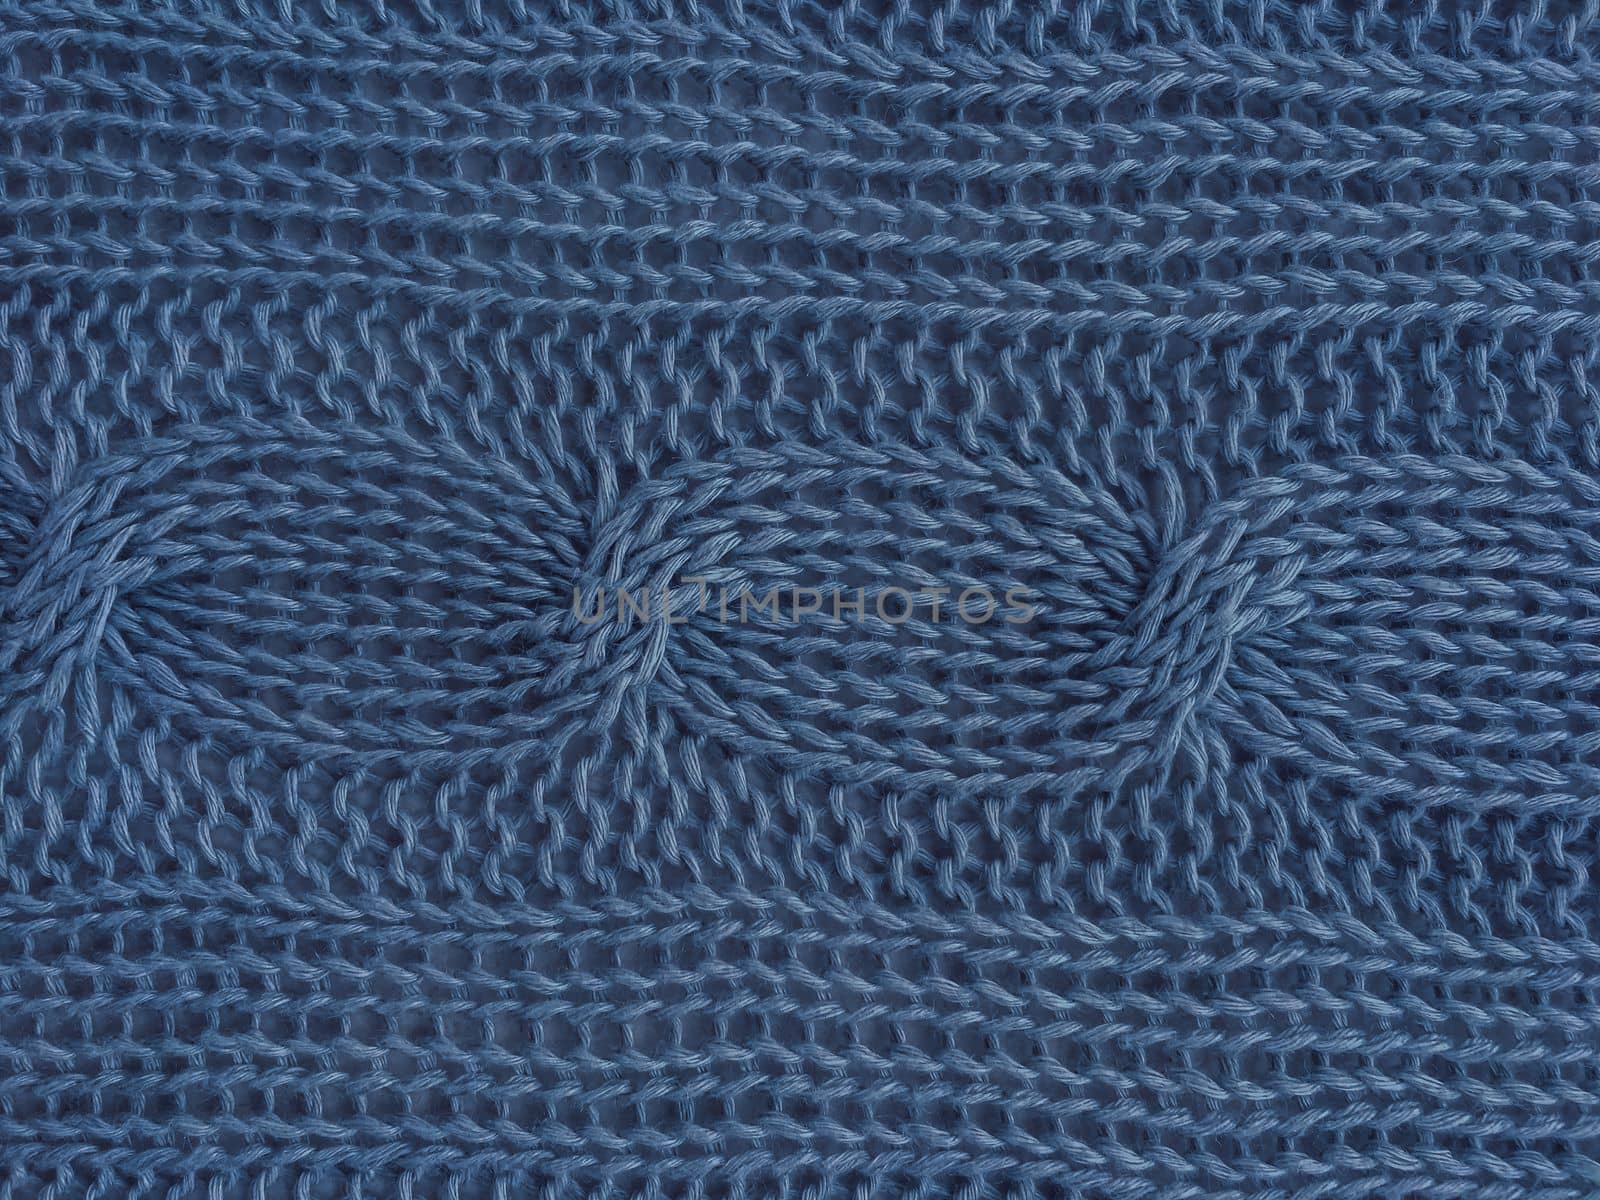 Wool Knit Closeup. Scandinavian Linen Embroidery. Abstract Macro Thread. Organic Jacquard Decor. Winter Knit Pattern. Xmas Woven Texture. Knitwear Cotton Background. Wool Knit Closeup.